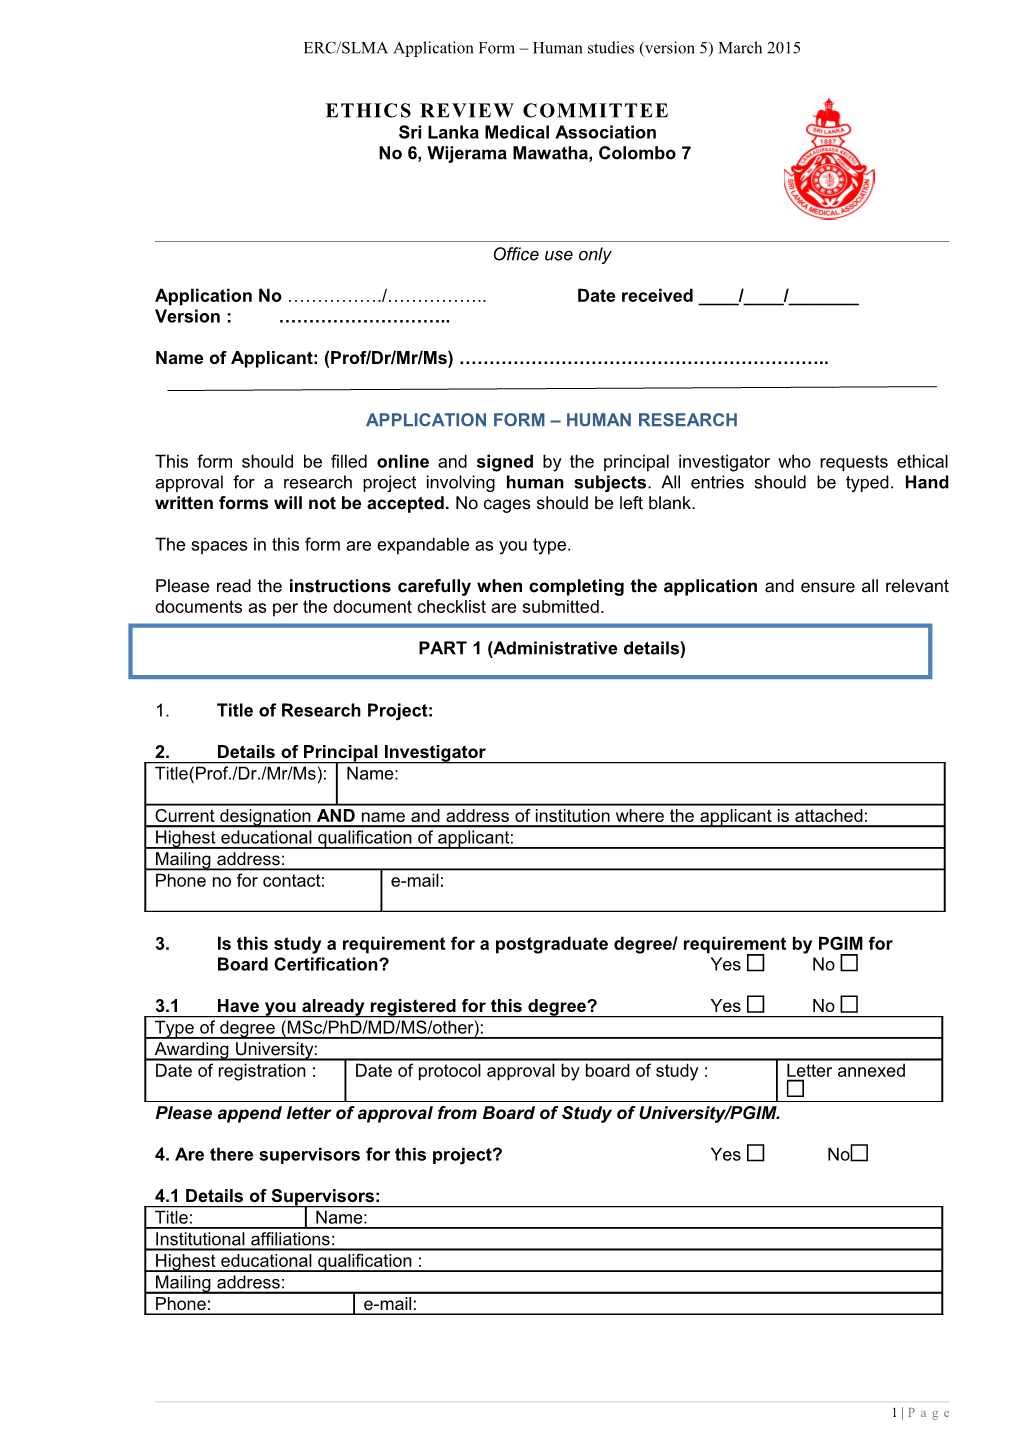 ERC/Slmaapplication Form Human Studies (Version 5)March 2015